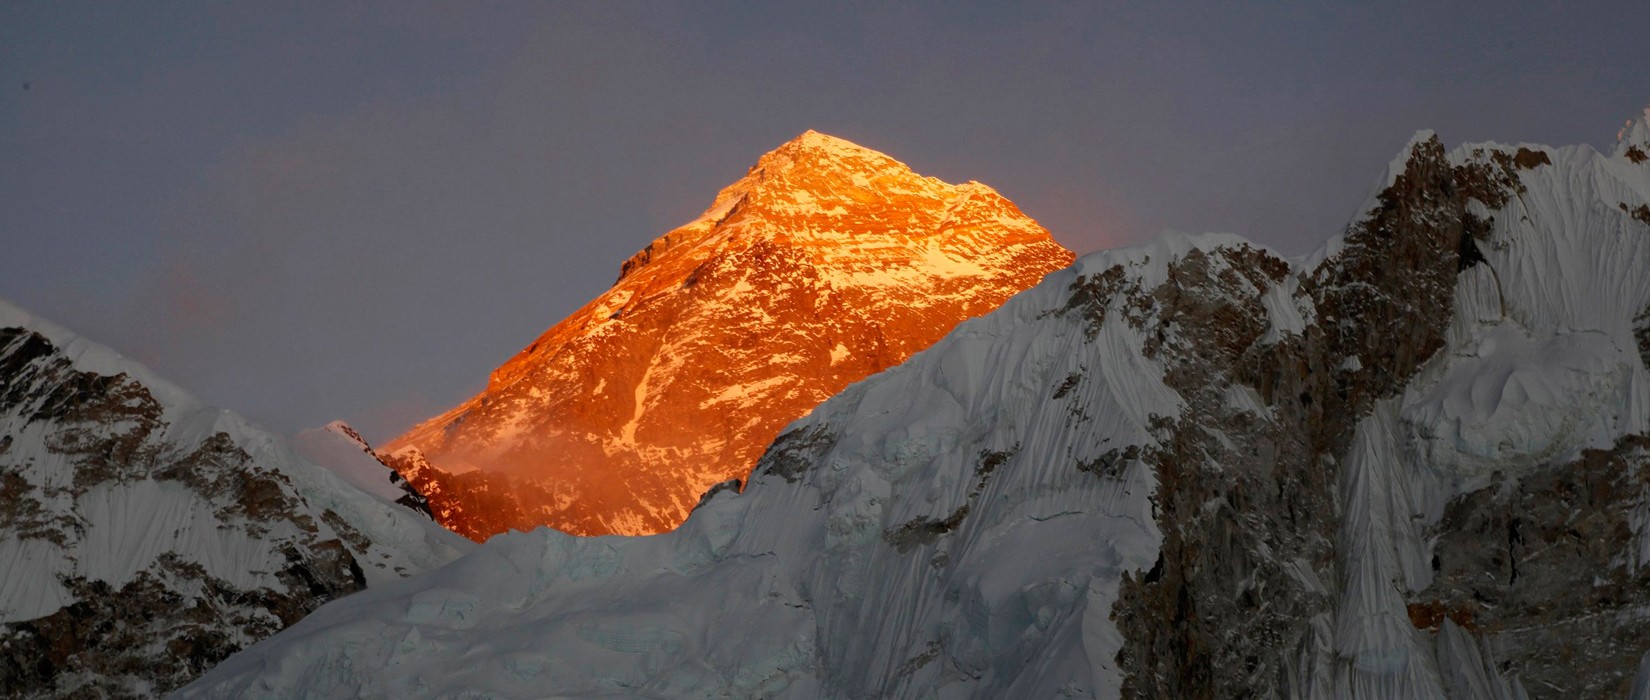 Mount Everest (Sagarmatha)